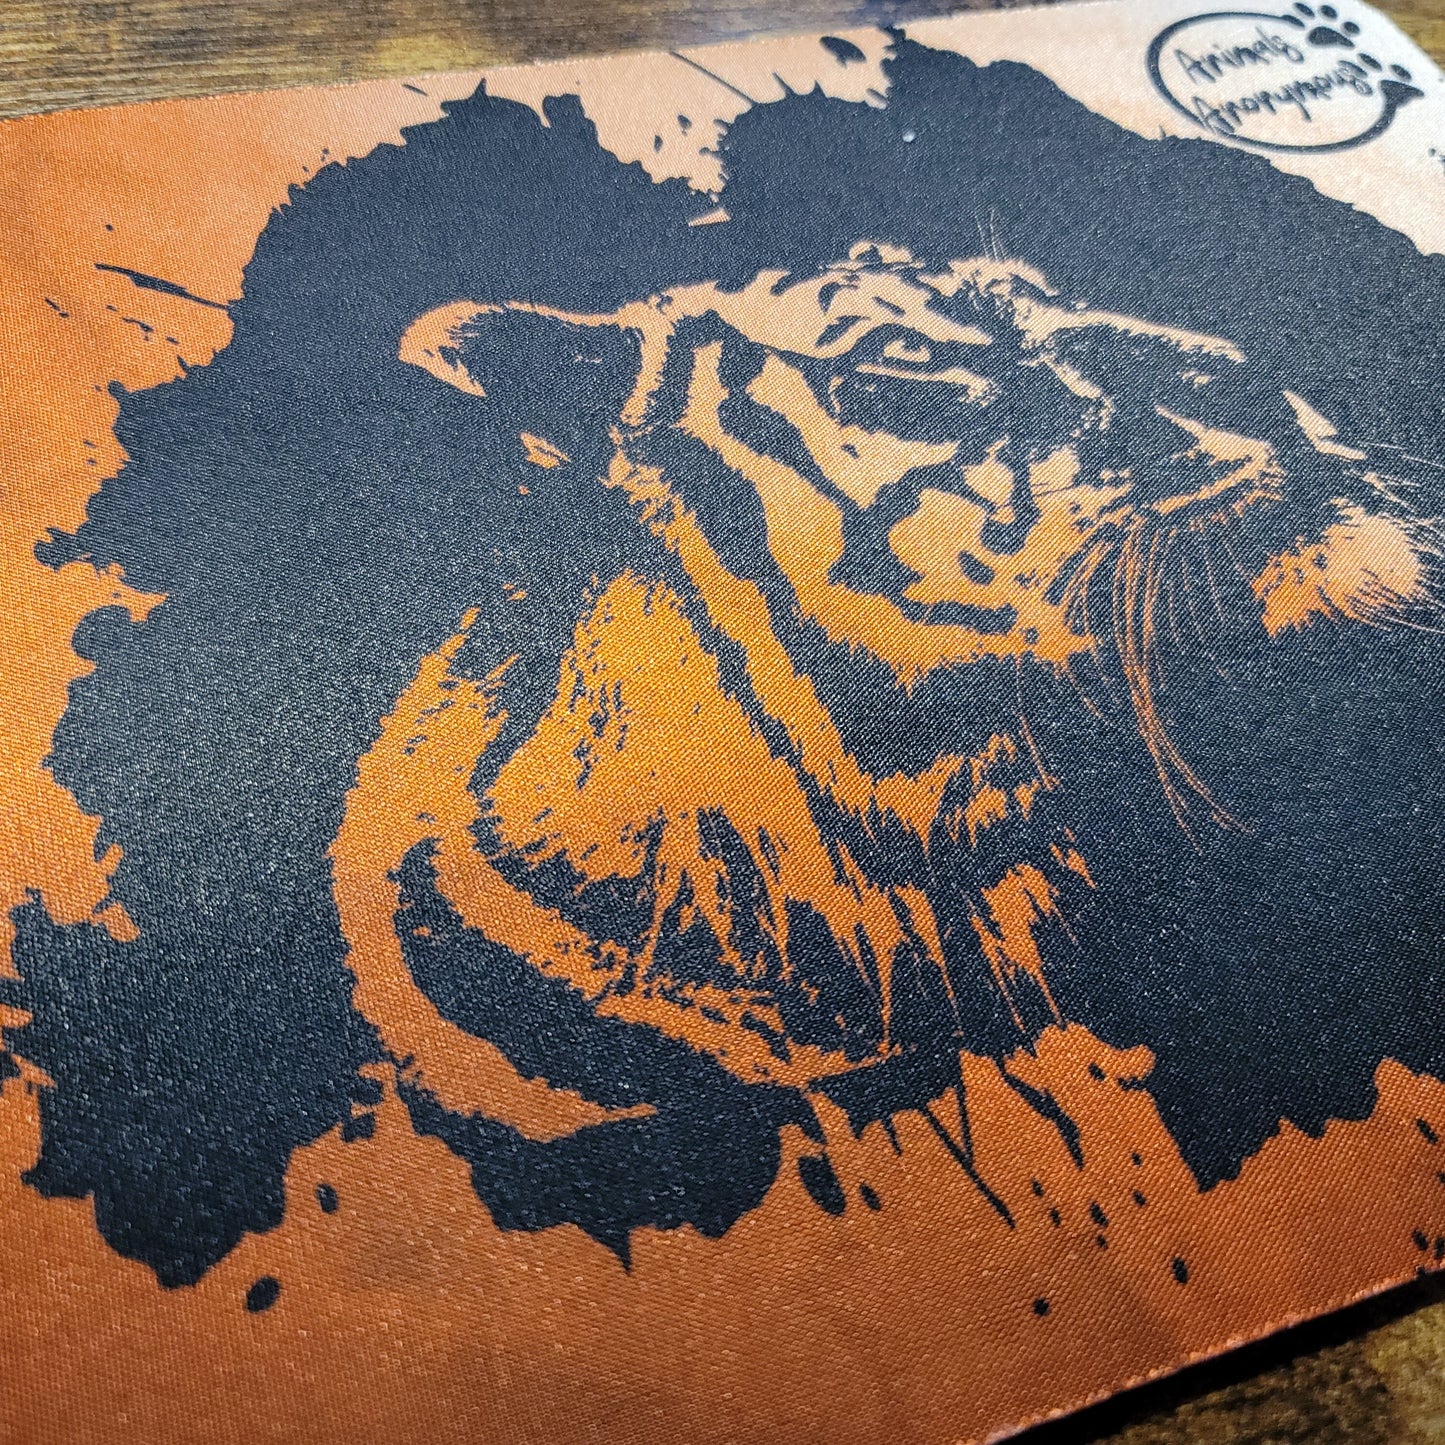 Tiger Face - Orange with Black Splatter Mousepad (Made to Order)